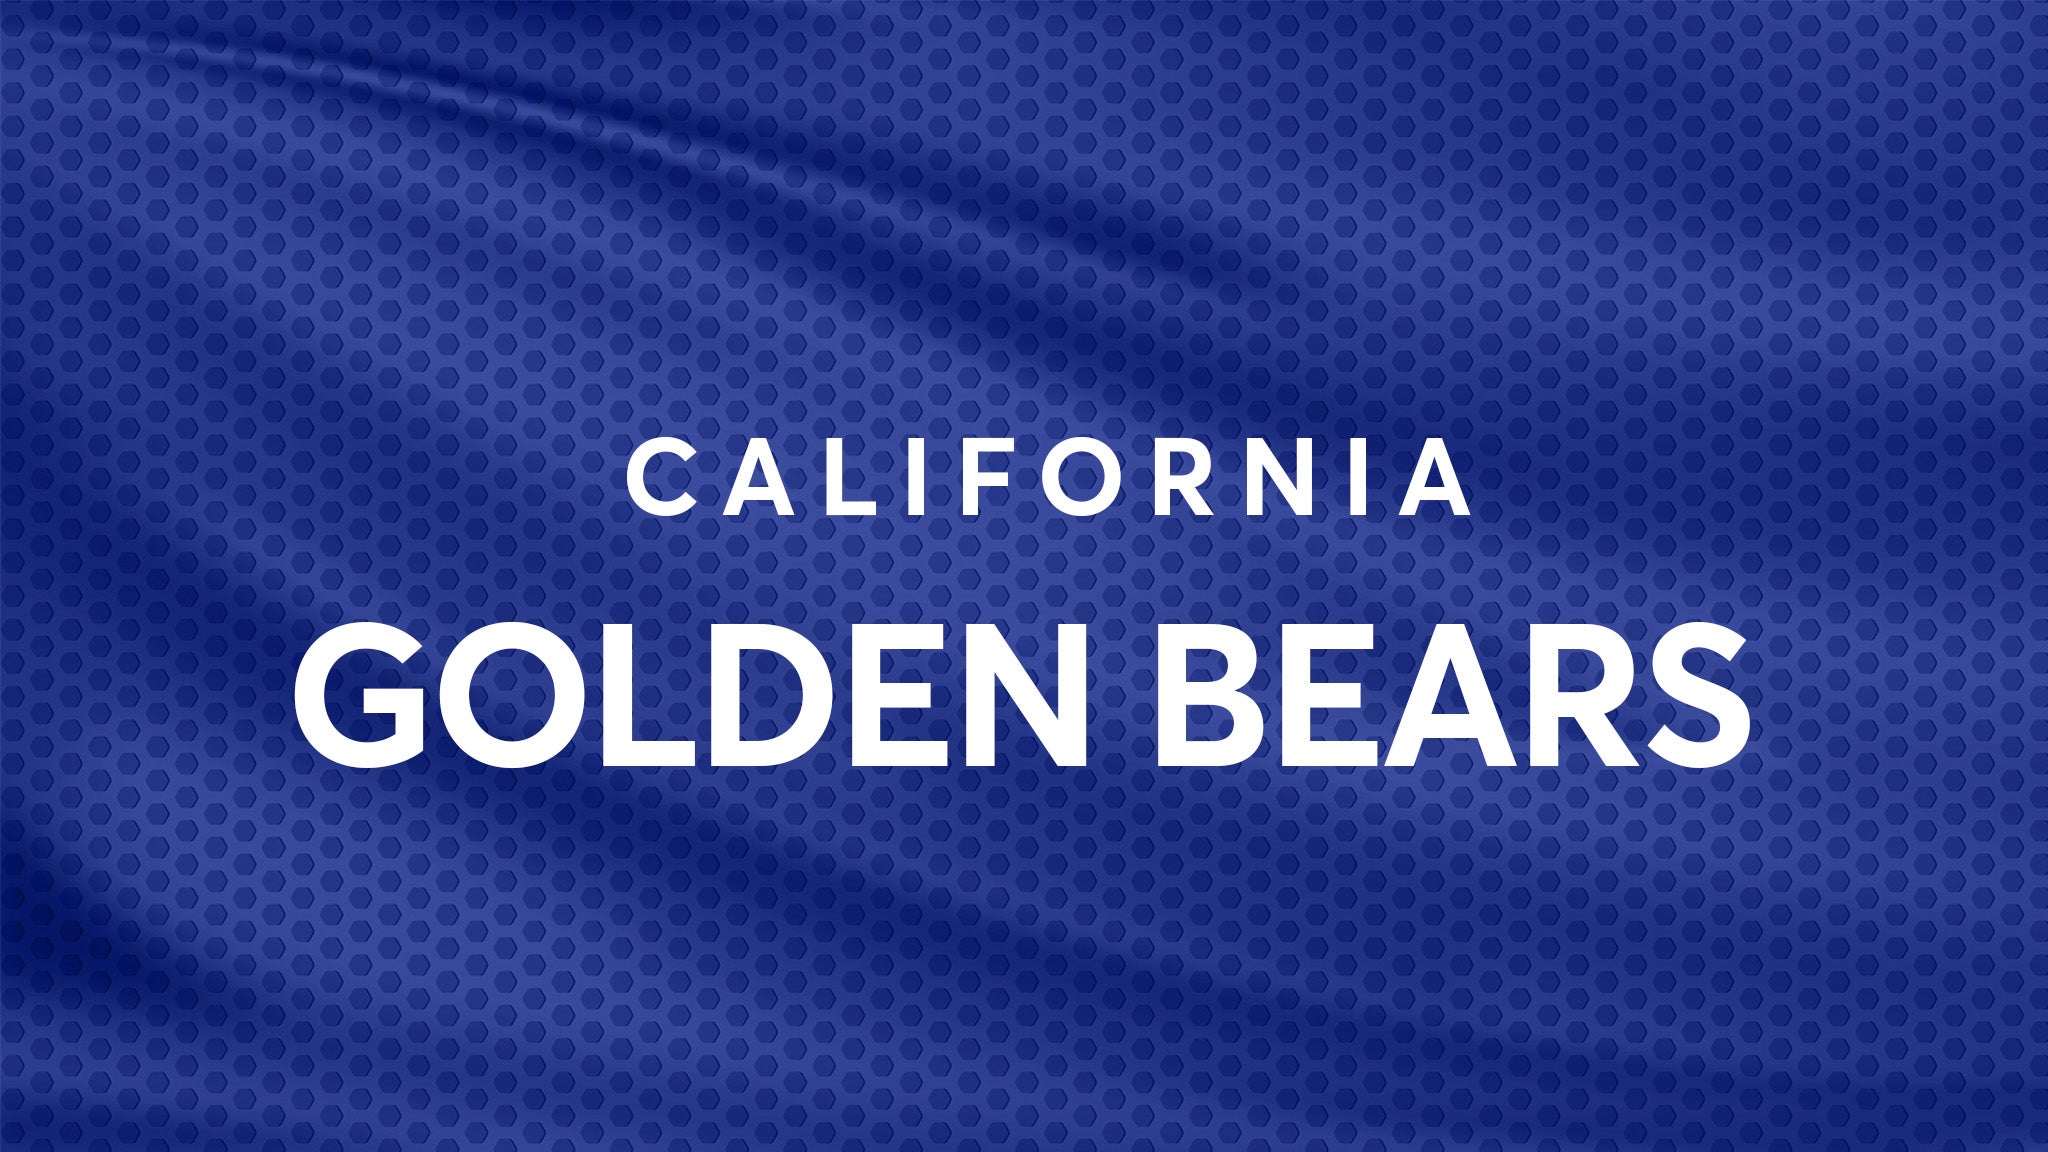 California Golden Bears Football vs. San Diego State Aztecs Football